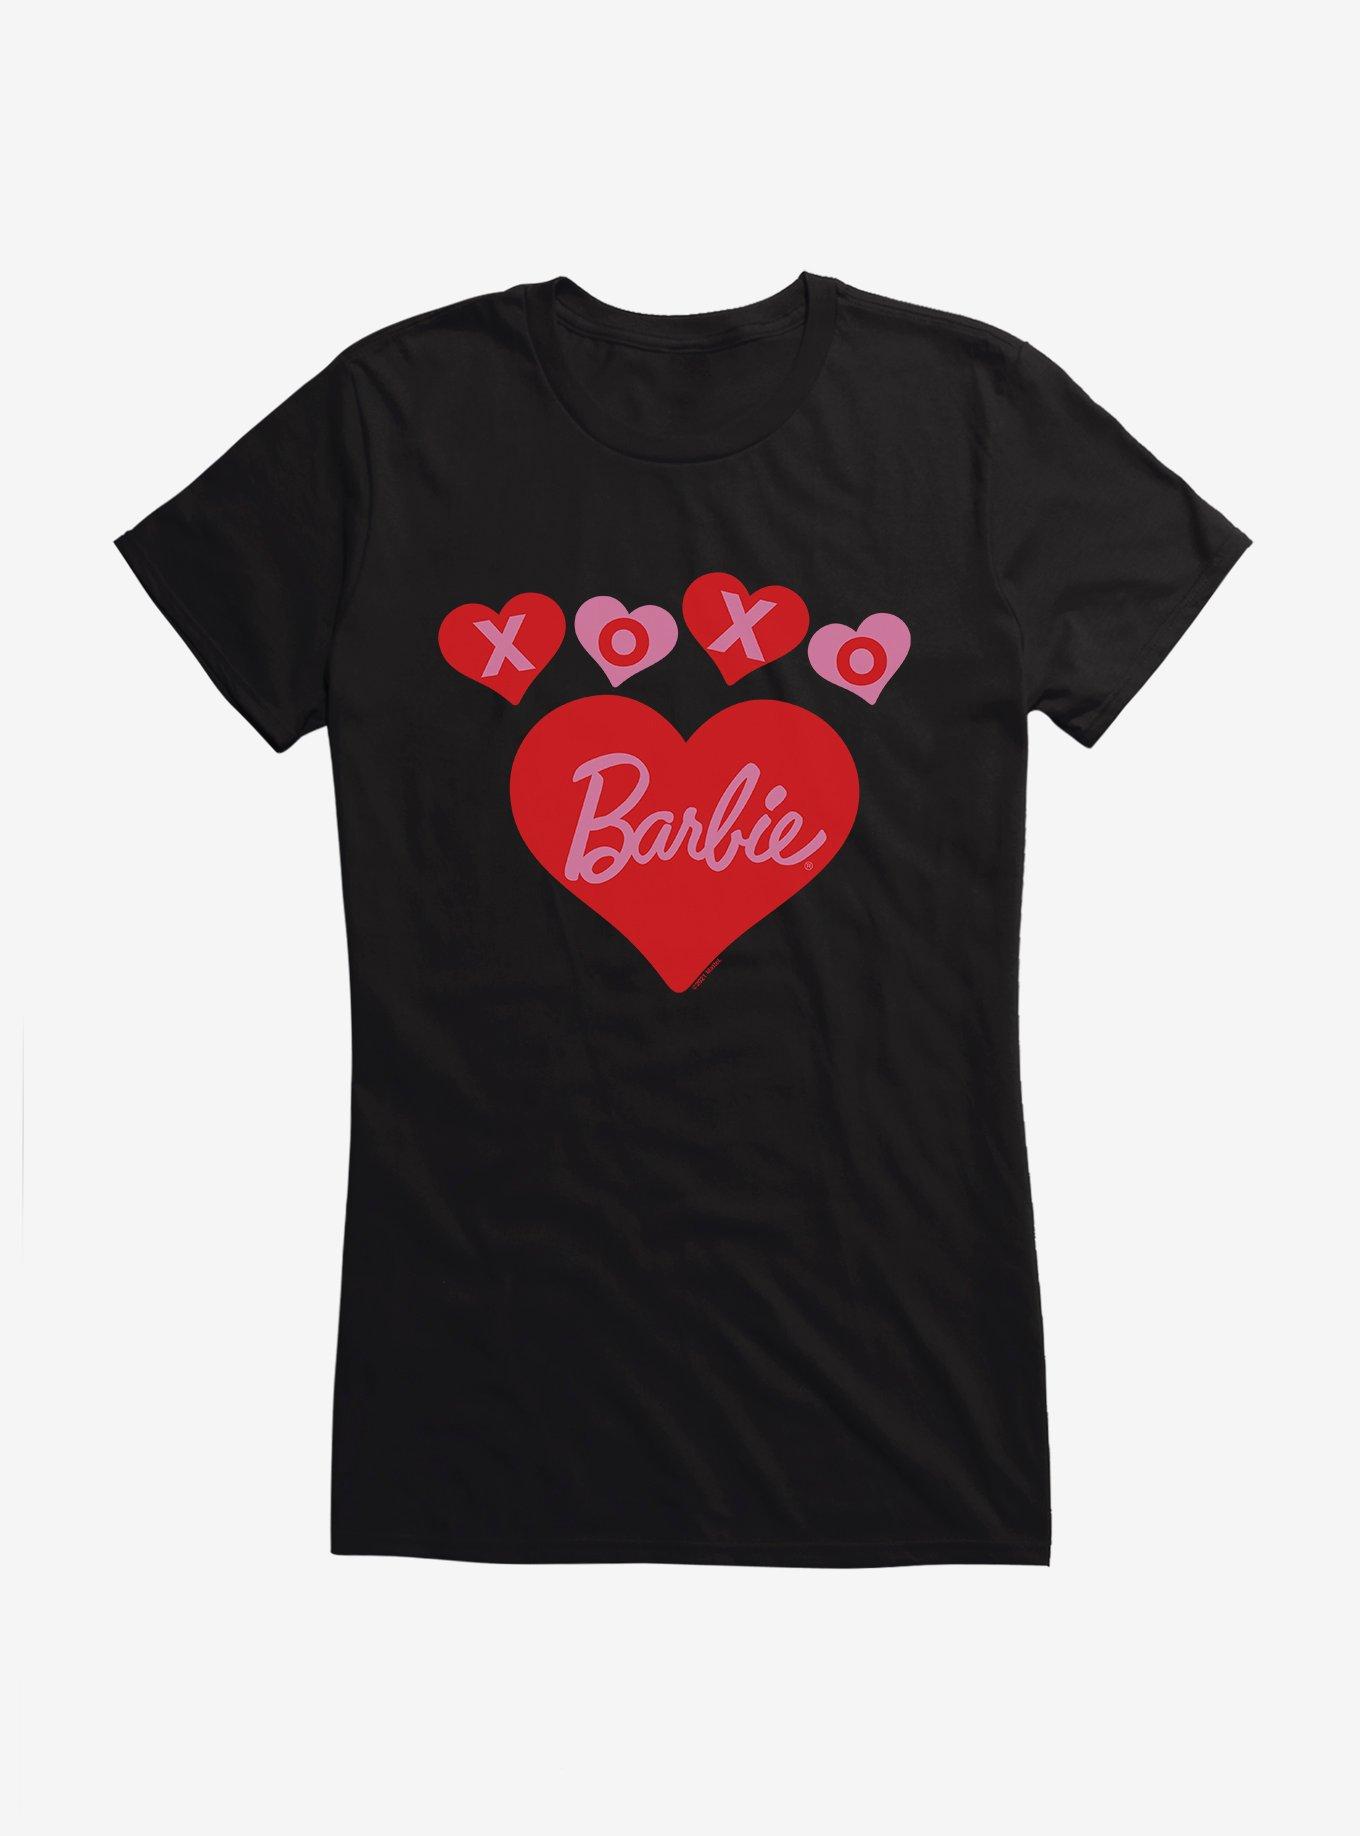 Barbie Valentine's Day XOXO Love Girls T-Shirt